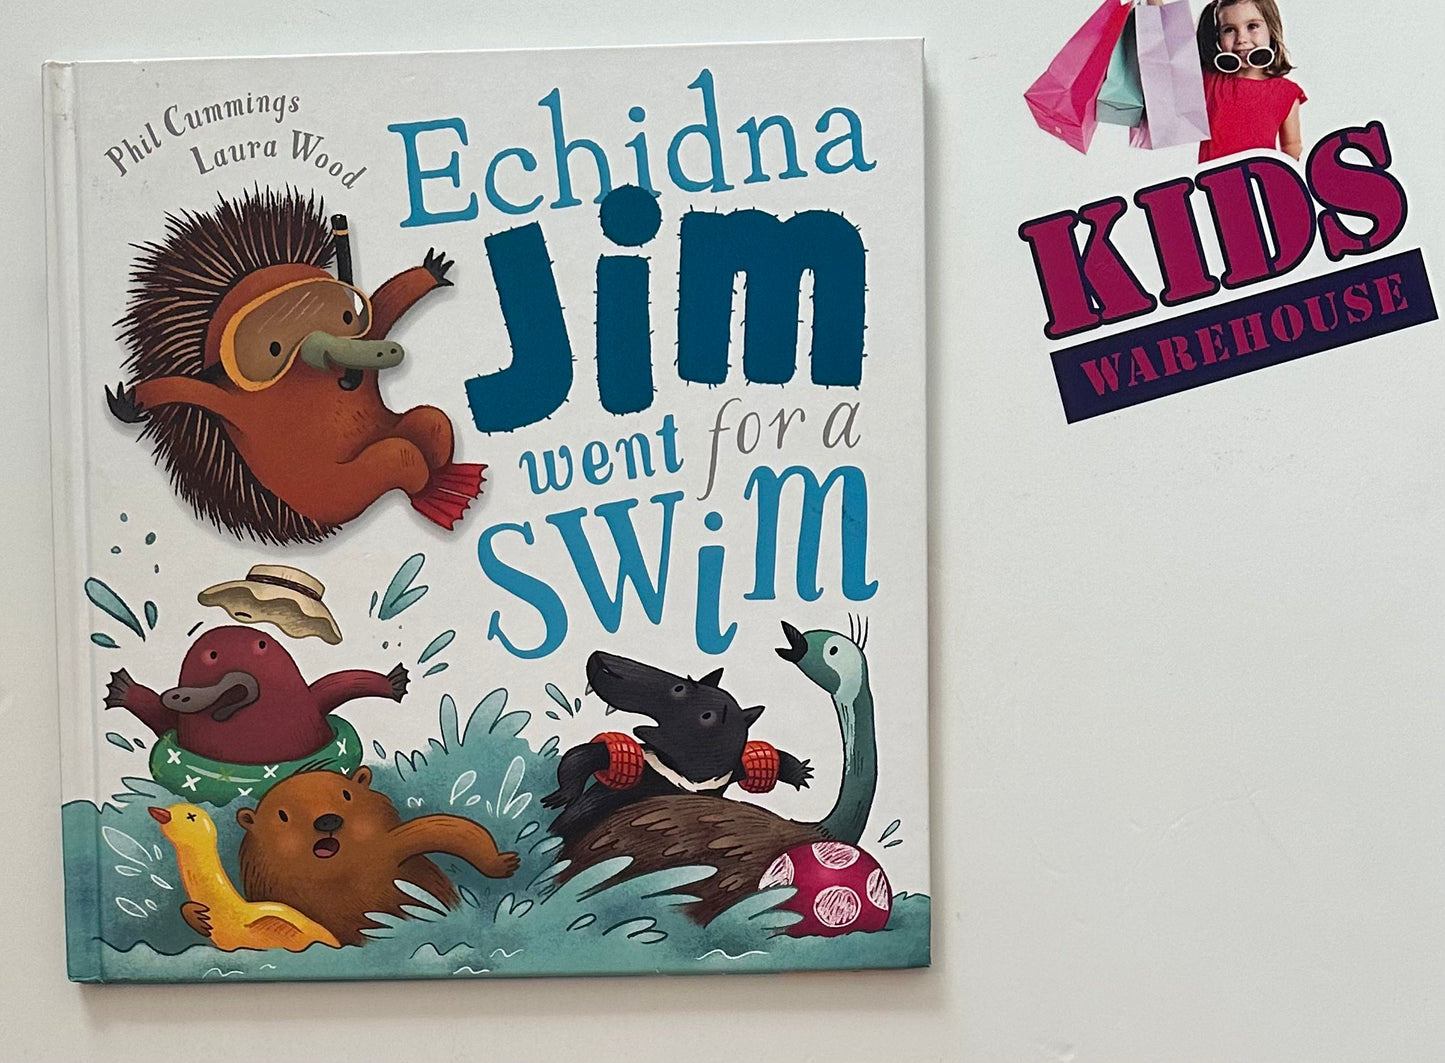 Echidna Jim went for a Swim - Phil Cummings & Laura Wood